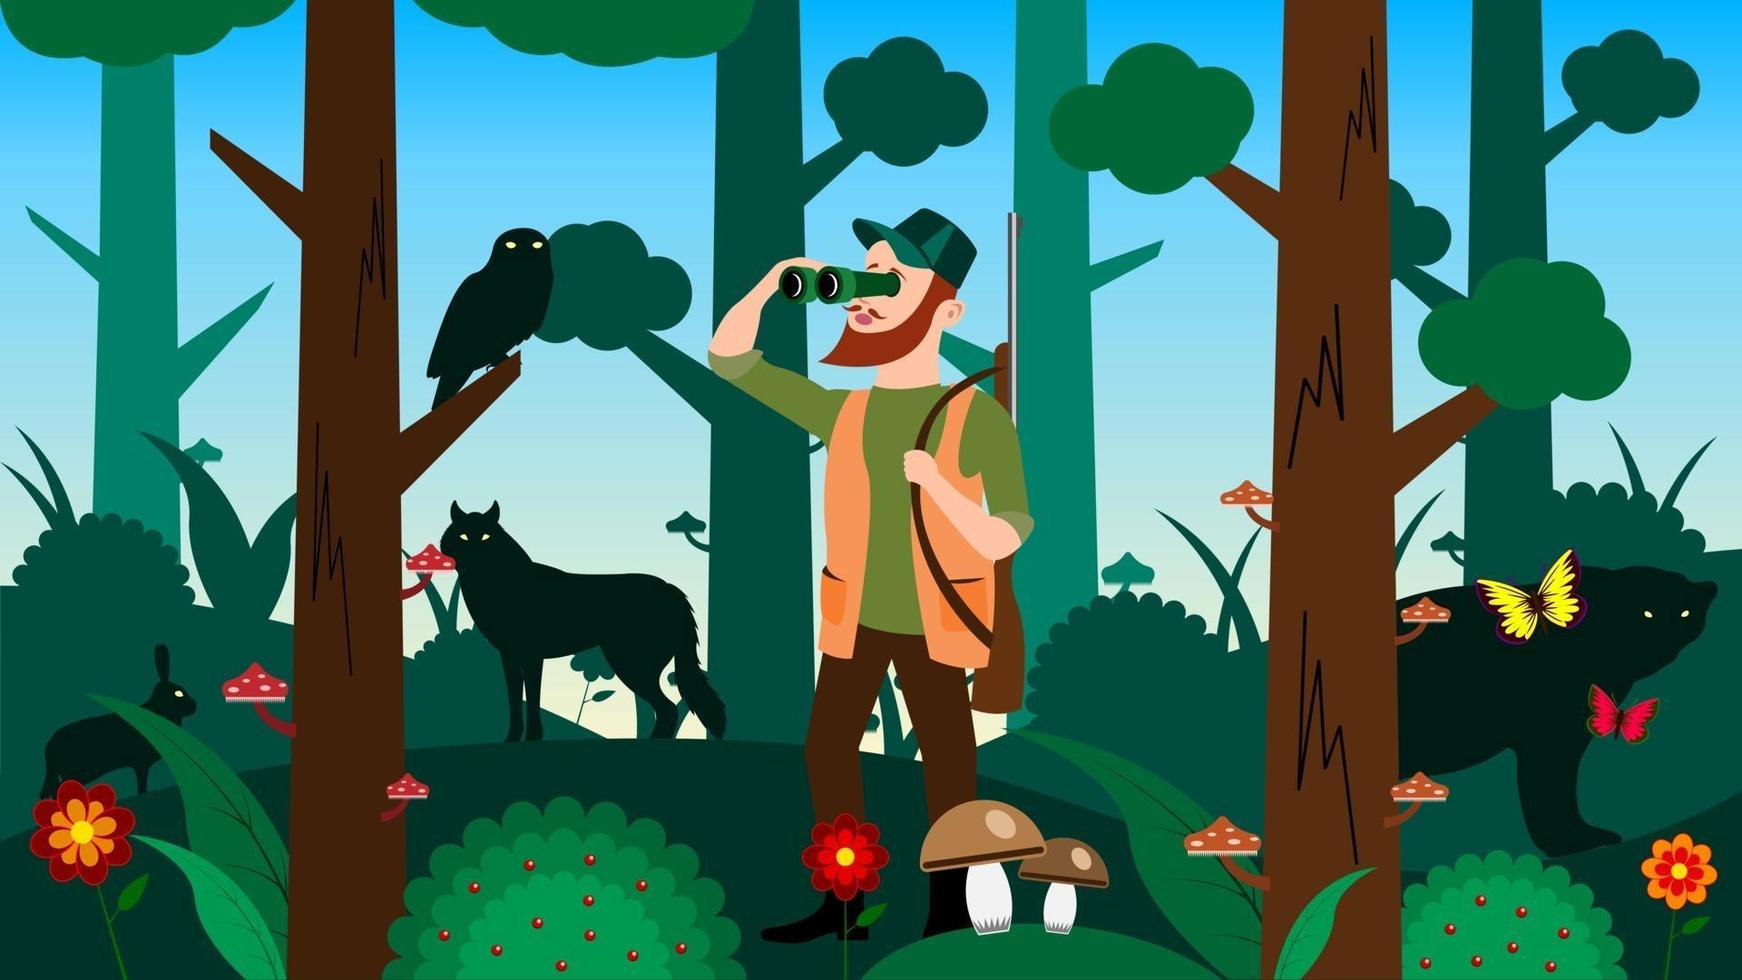 hunter looks through binoculars in forest cartoon vector